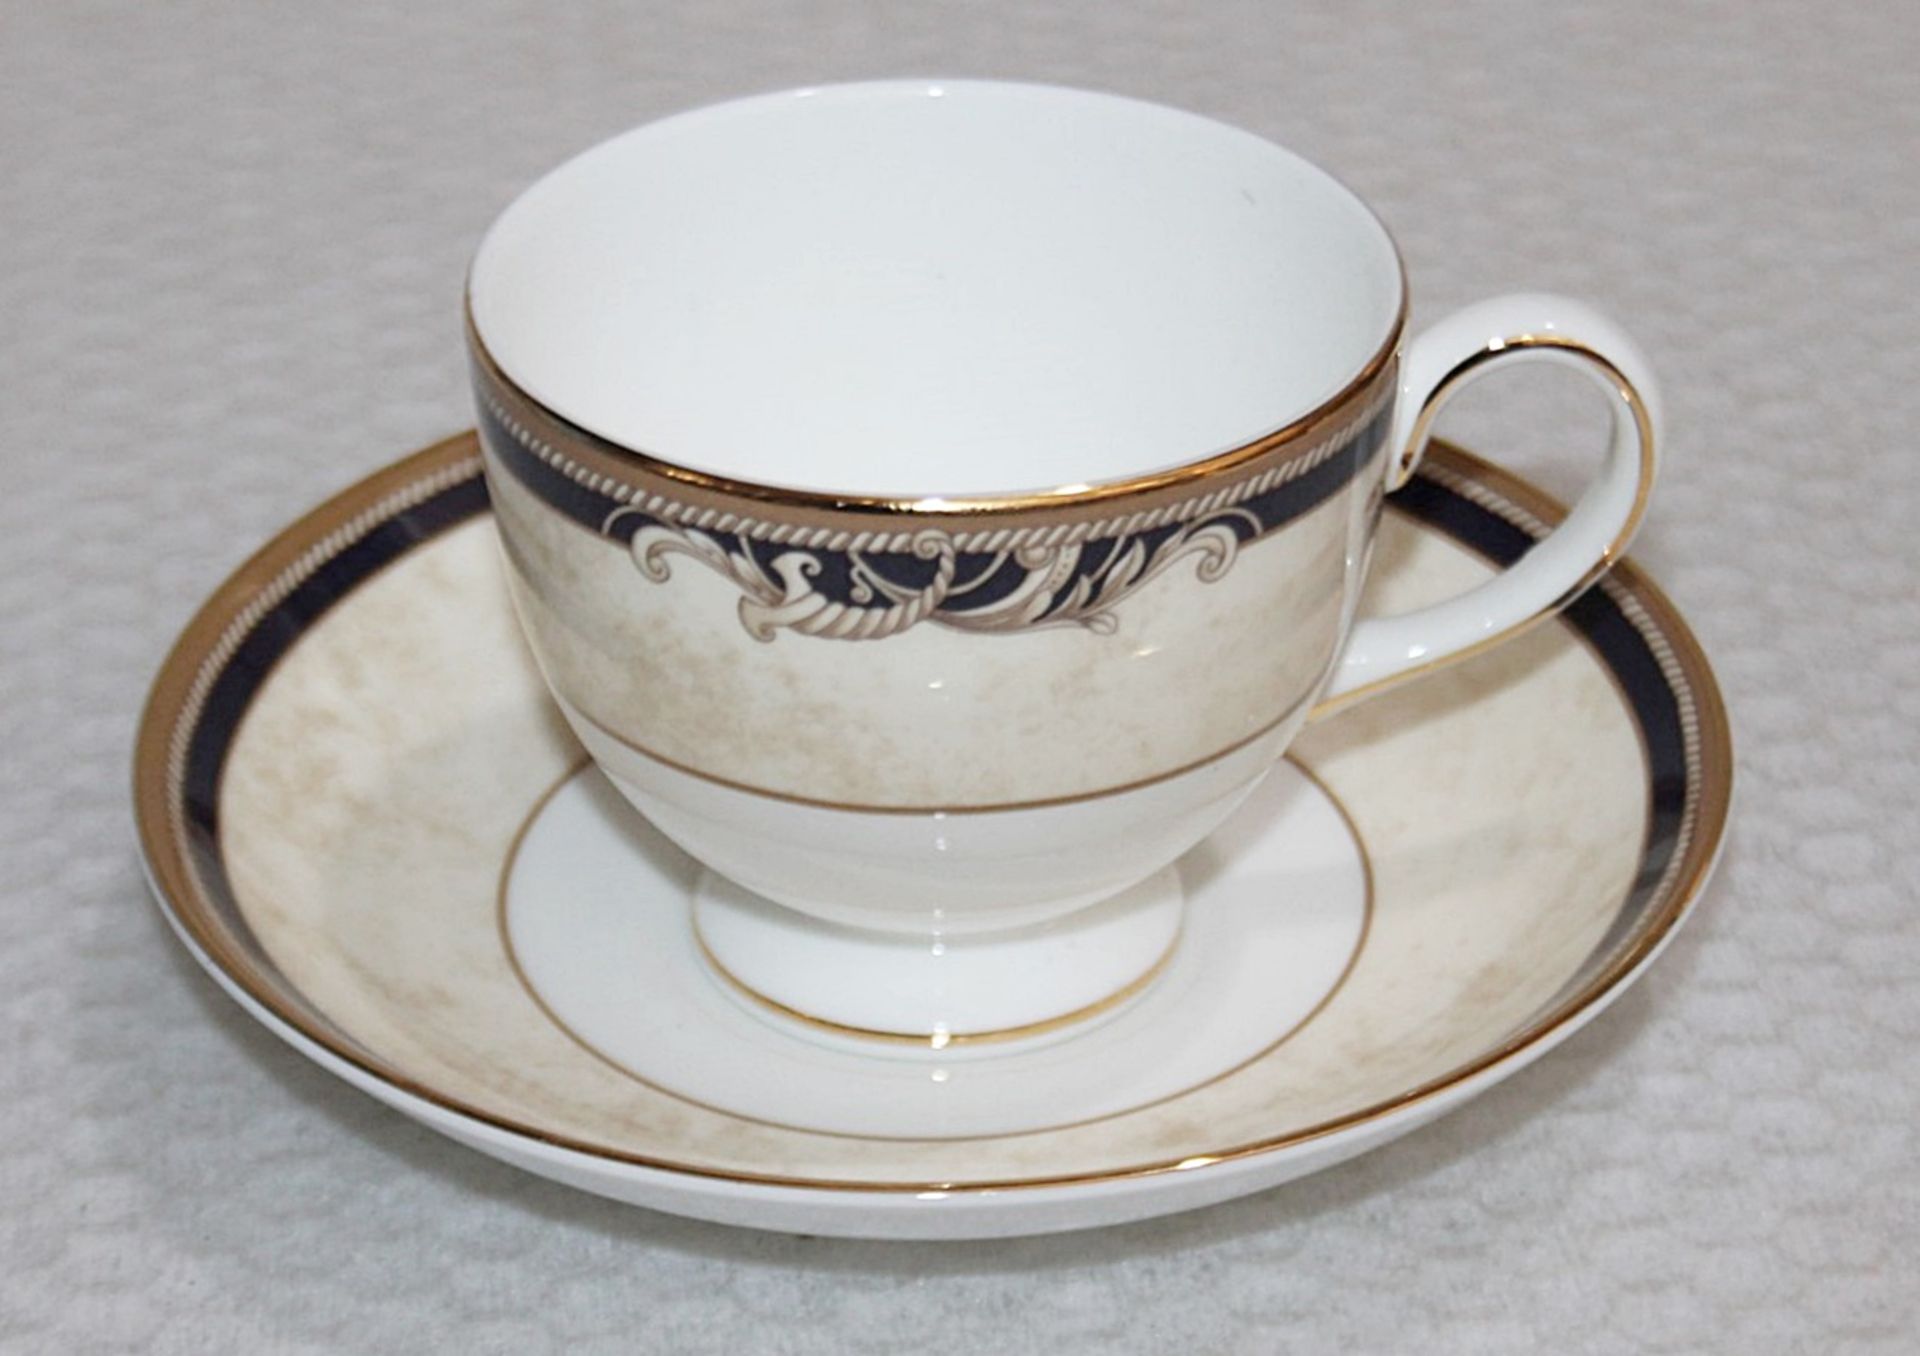 1 x Set of 2 WEDGWOOD 'Cornucopia' Fine Bone China Teacups and Saucers, With 22-Karat Gold Plating - Image 3 of 10